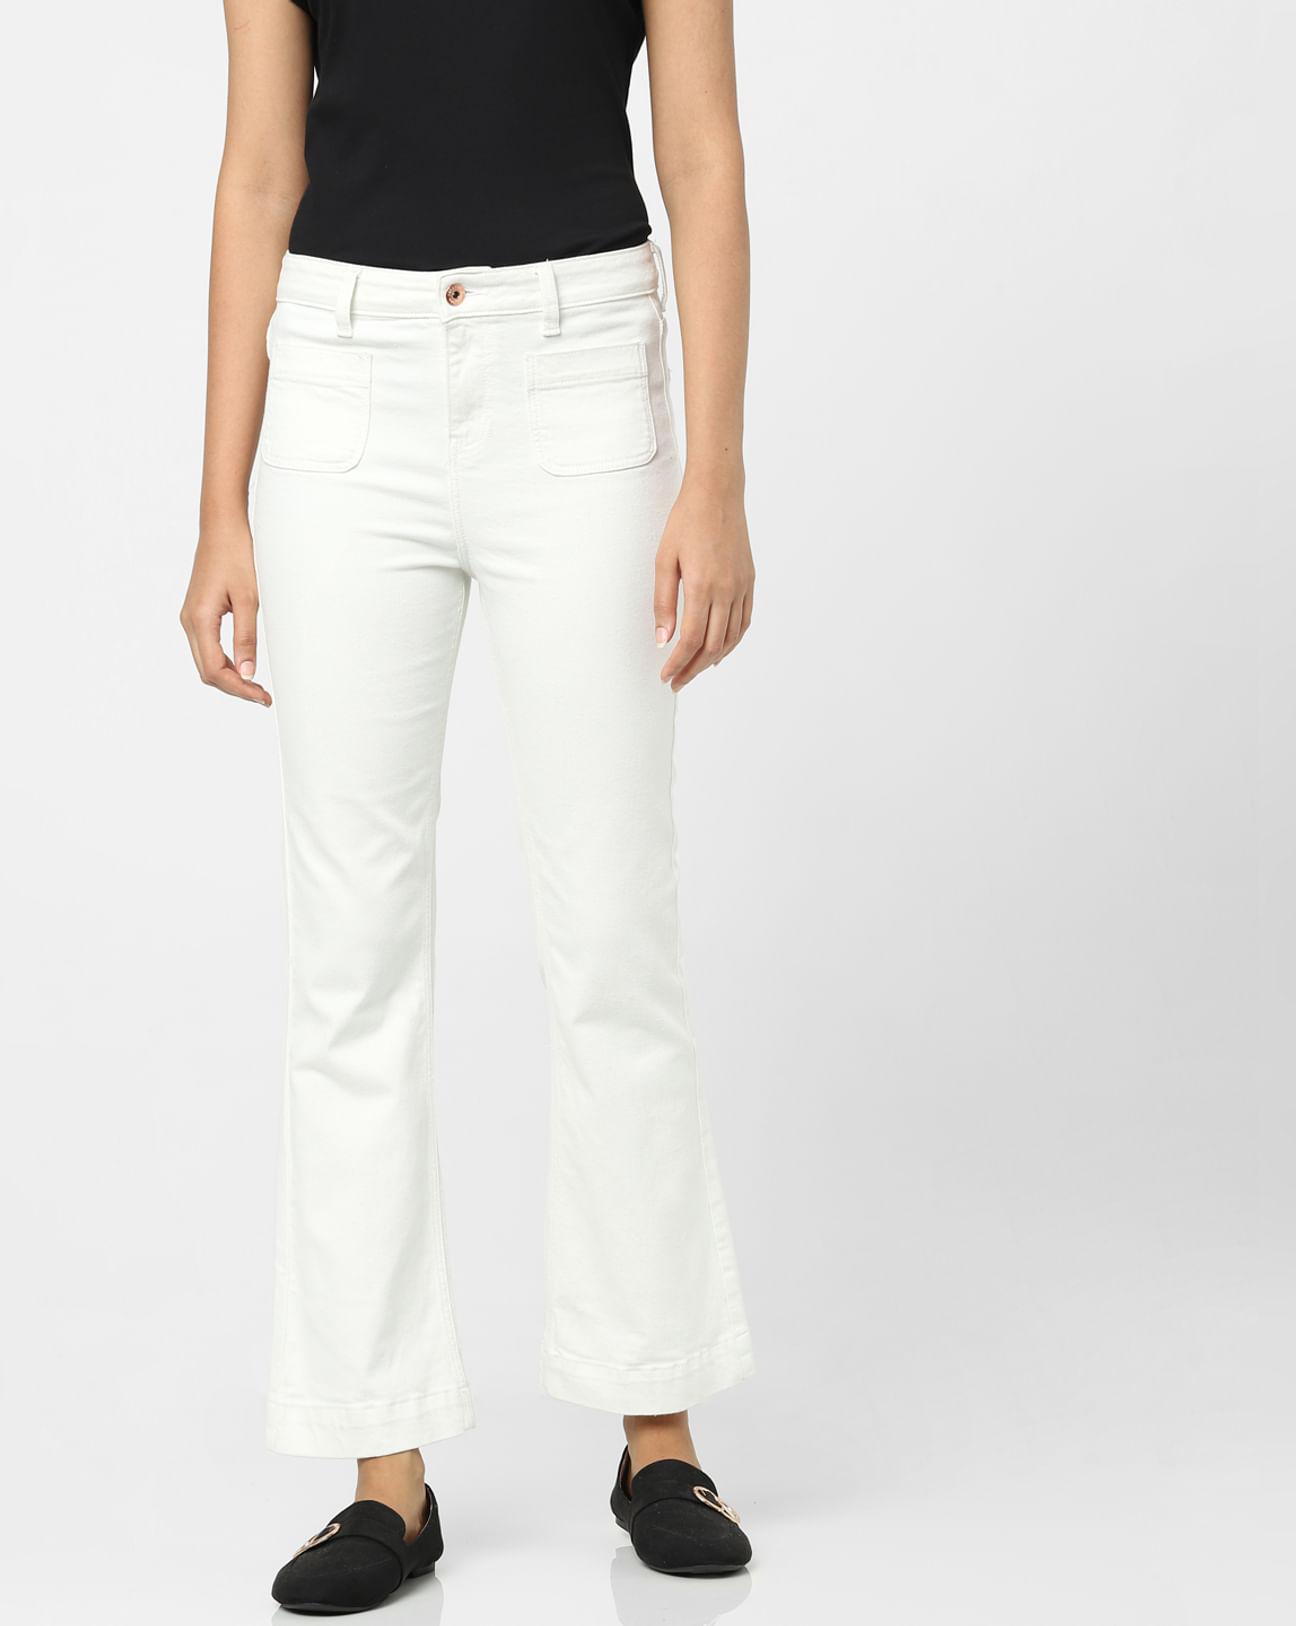 white plain coloured jeans